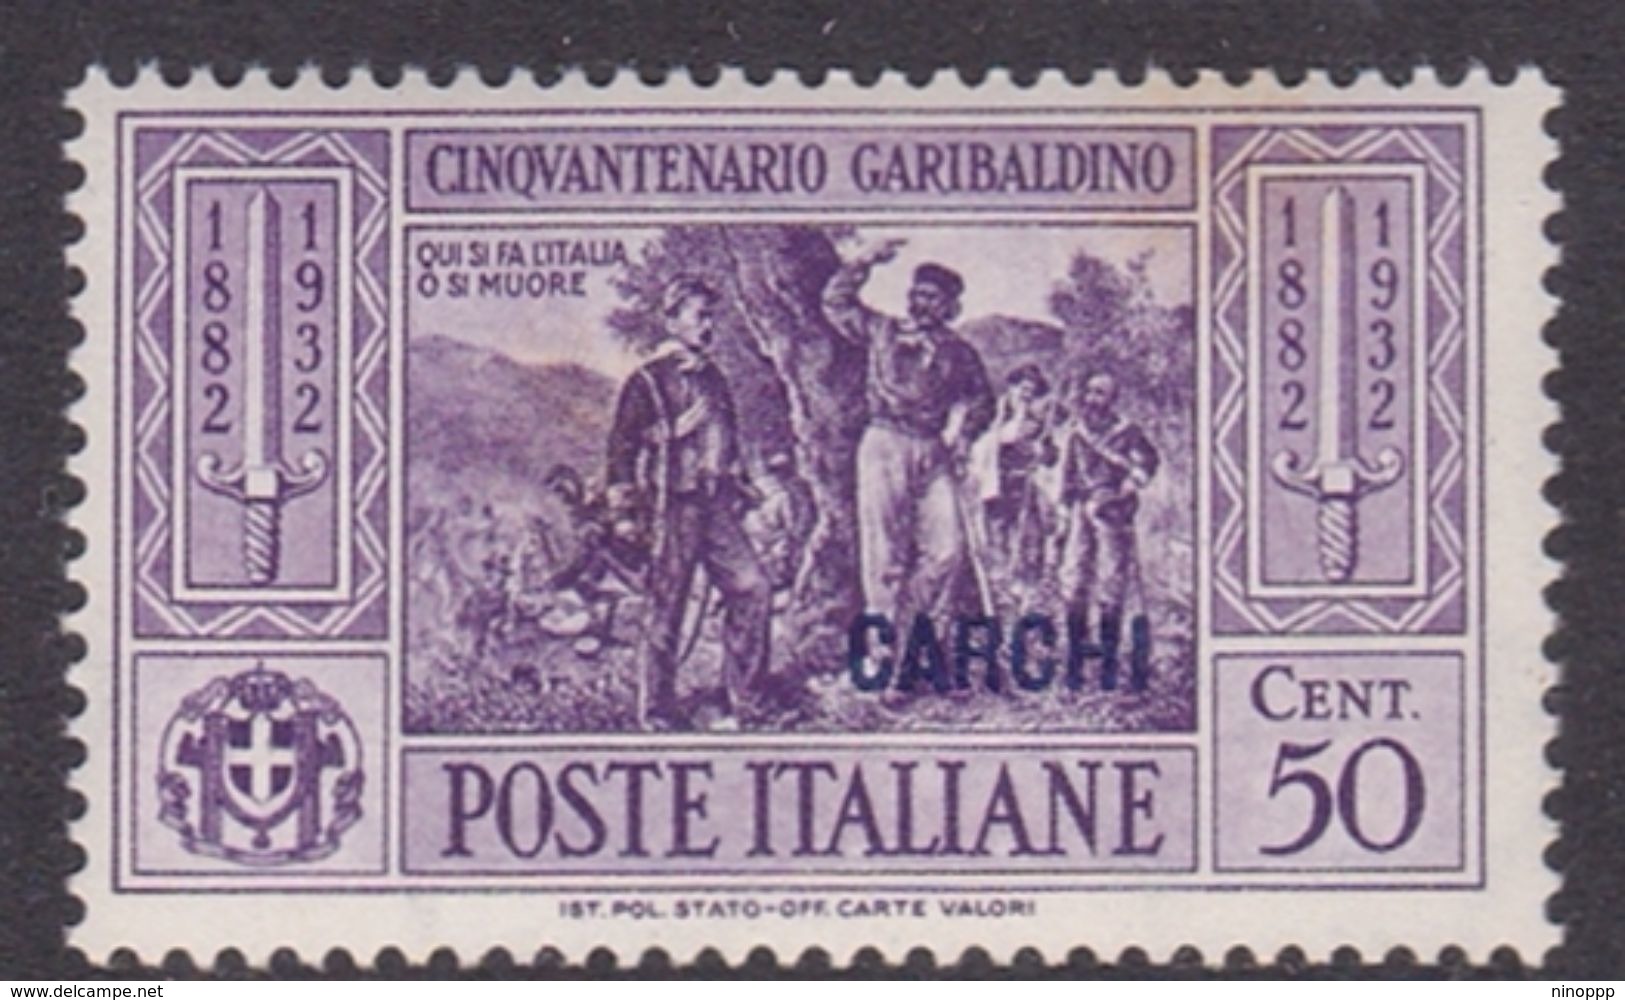 Italy-Colonies And Territories-Aegean-Carchi S 21 1932 Garibaldi 50c Violet MNH - Aegean (Carchi)